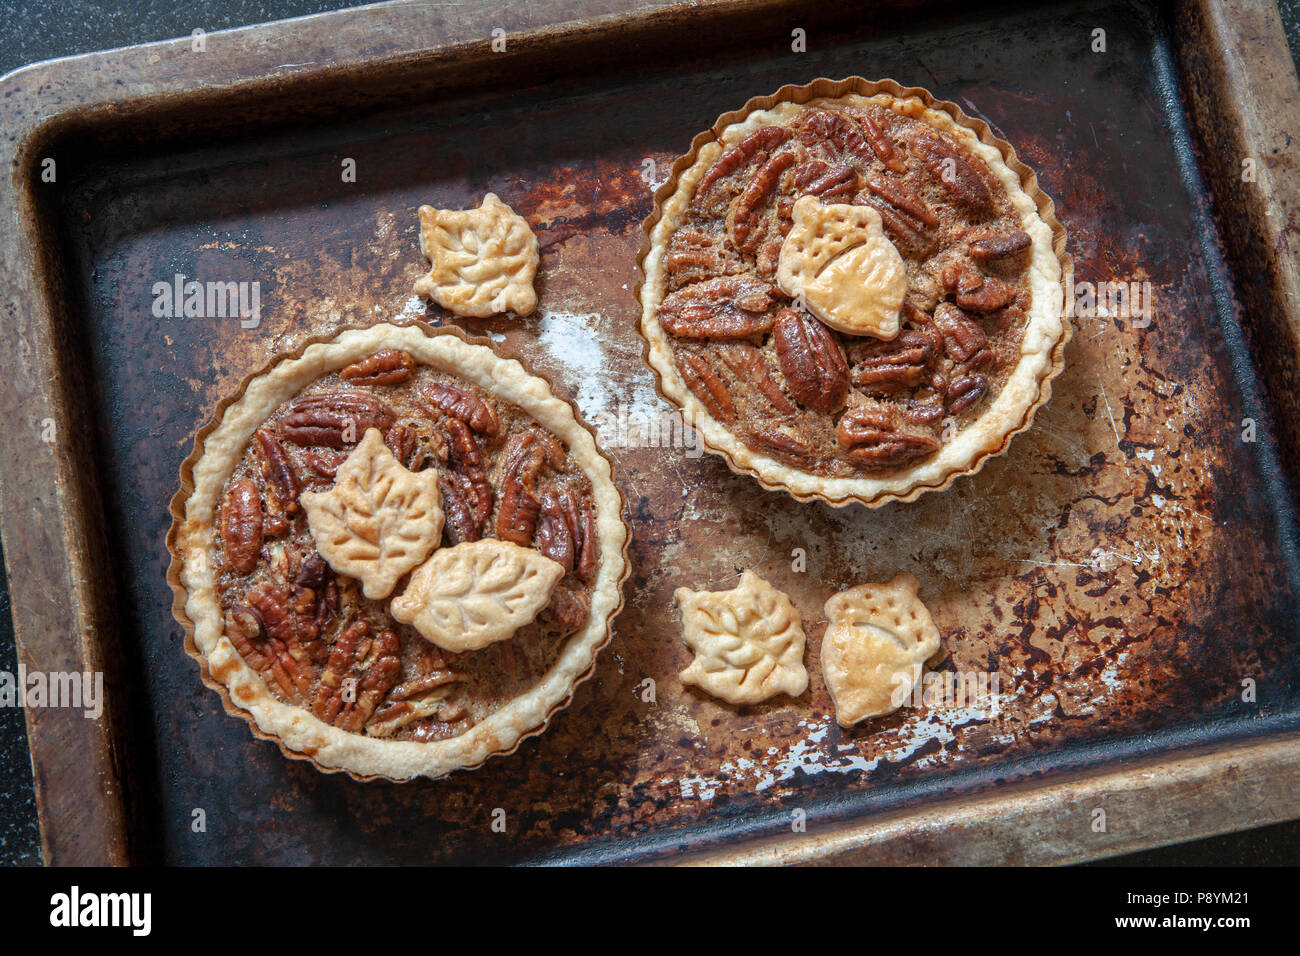 Two Mini Pecan Pies on Baking Sheet, High Angle View Stock Photo